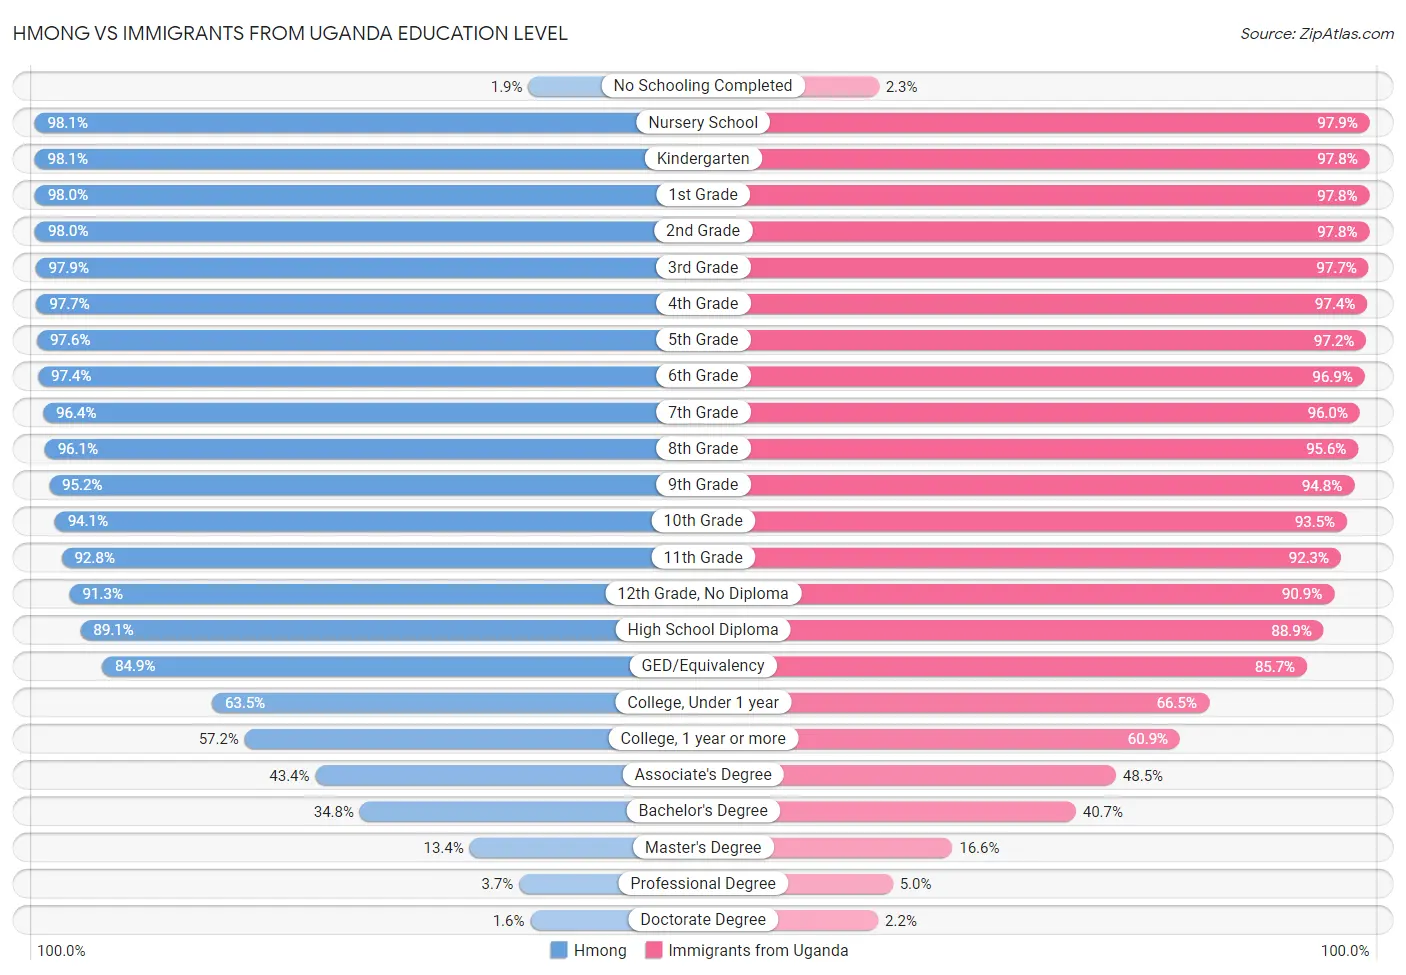 Hmong vs Immigrants from Uganda Education Level